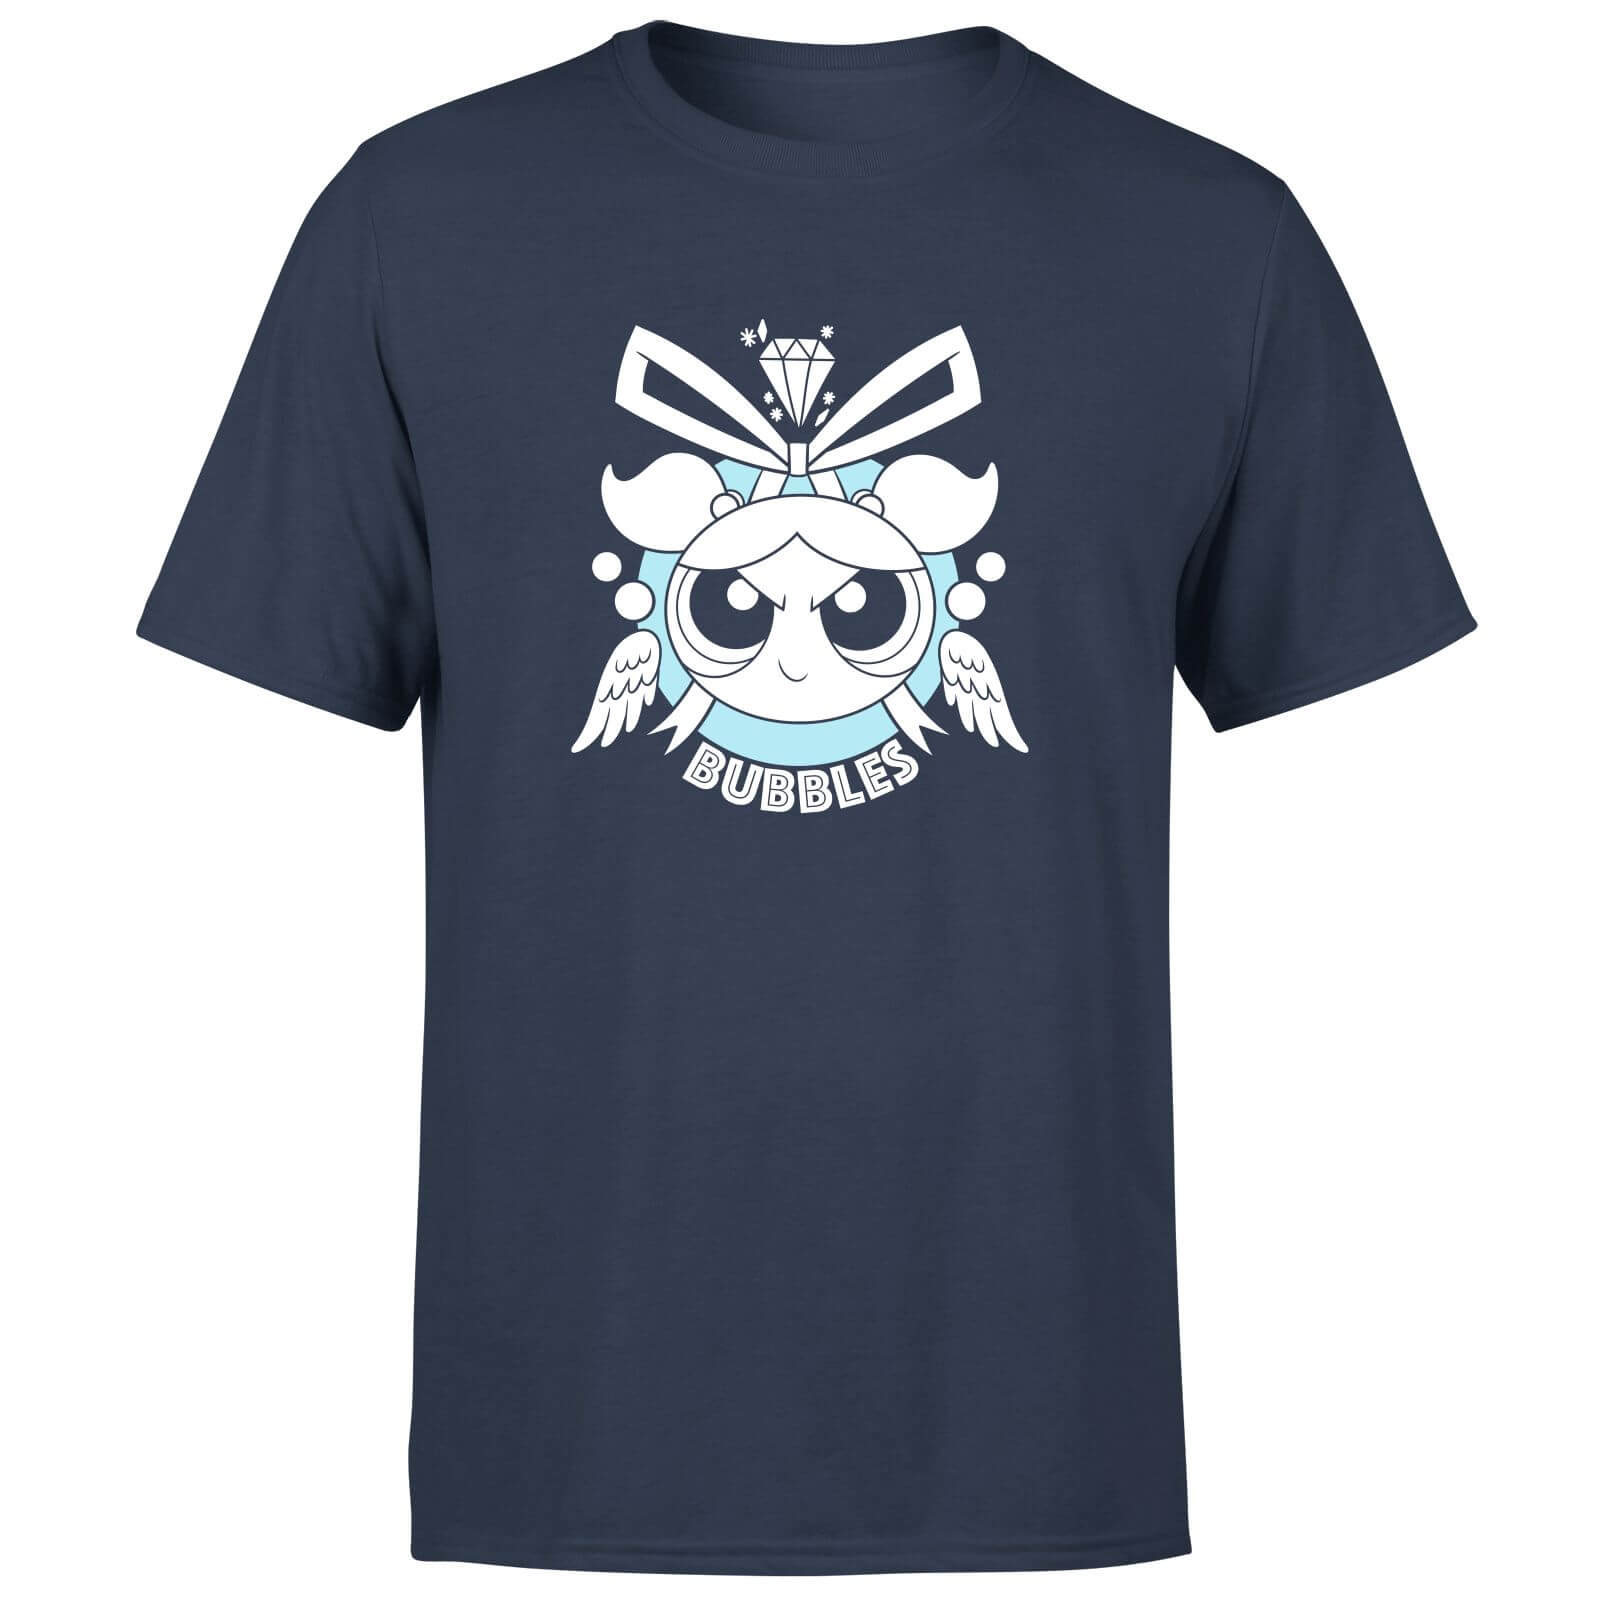 The Powerpuff Girls Bubbles Unisex T-Shirt - Navy - S - Navy